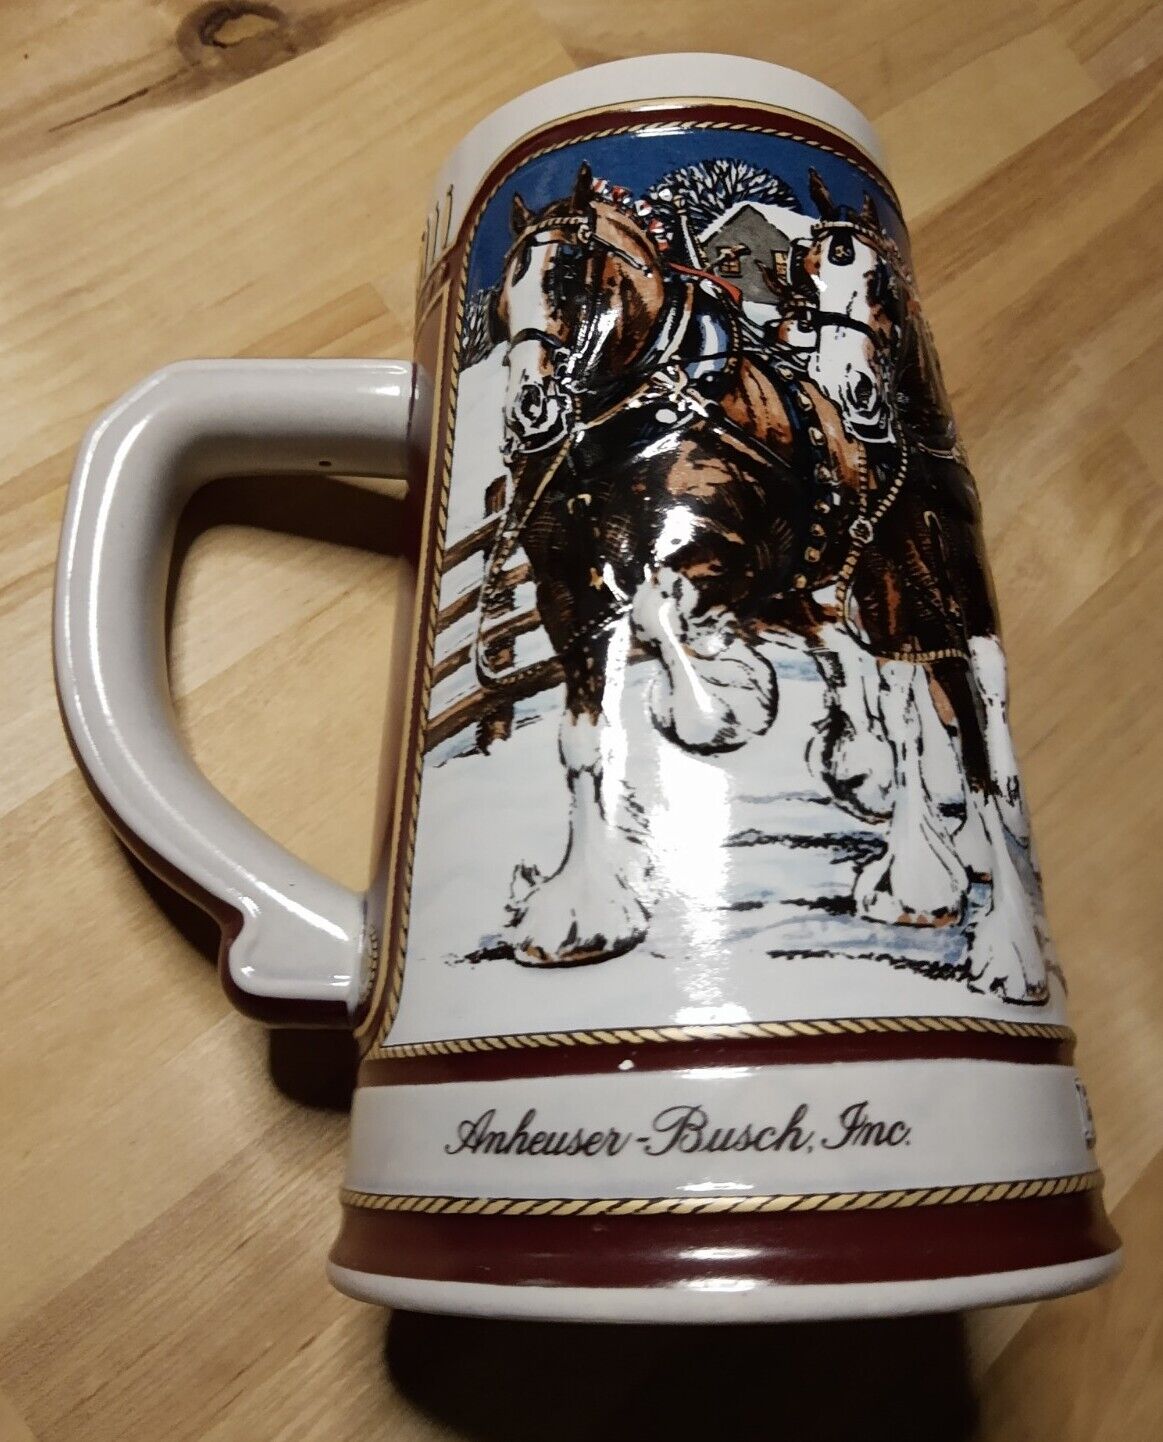 Vintage 1989 Budweiser Clydesdale Holiday Beer Stein ~Anheuser Busch Brewery Mug